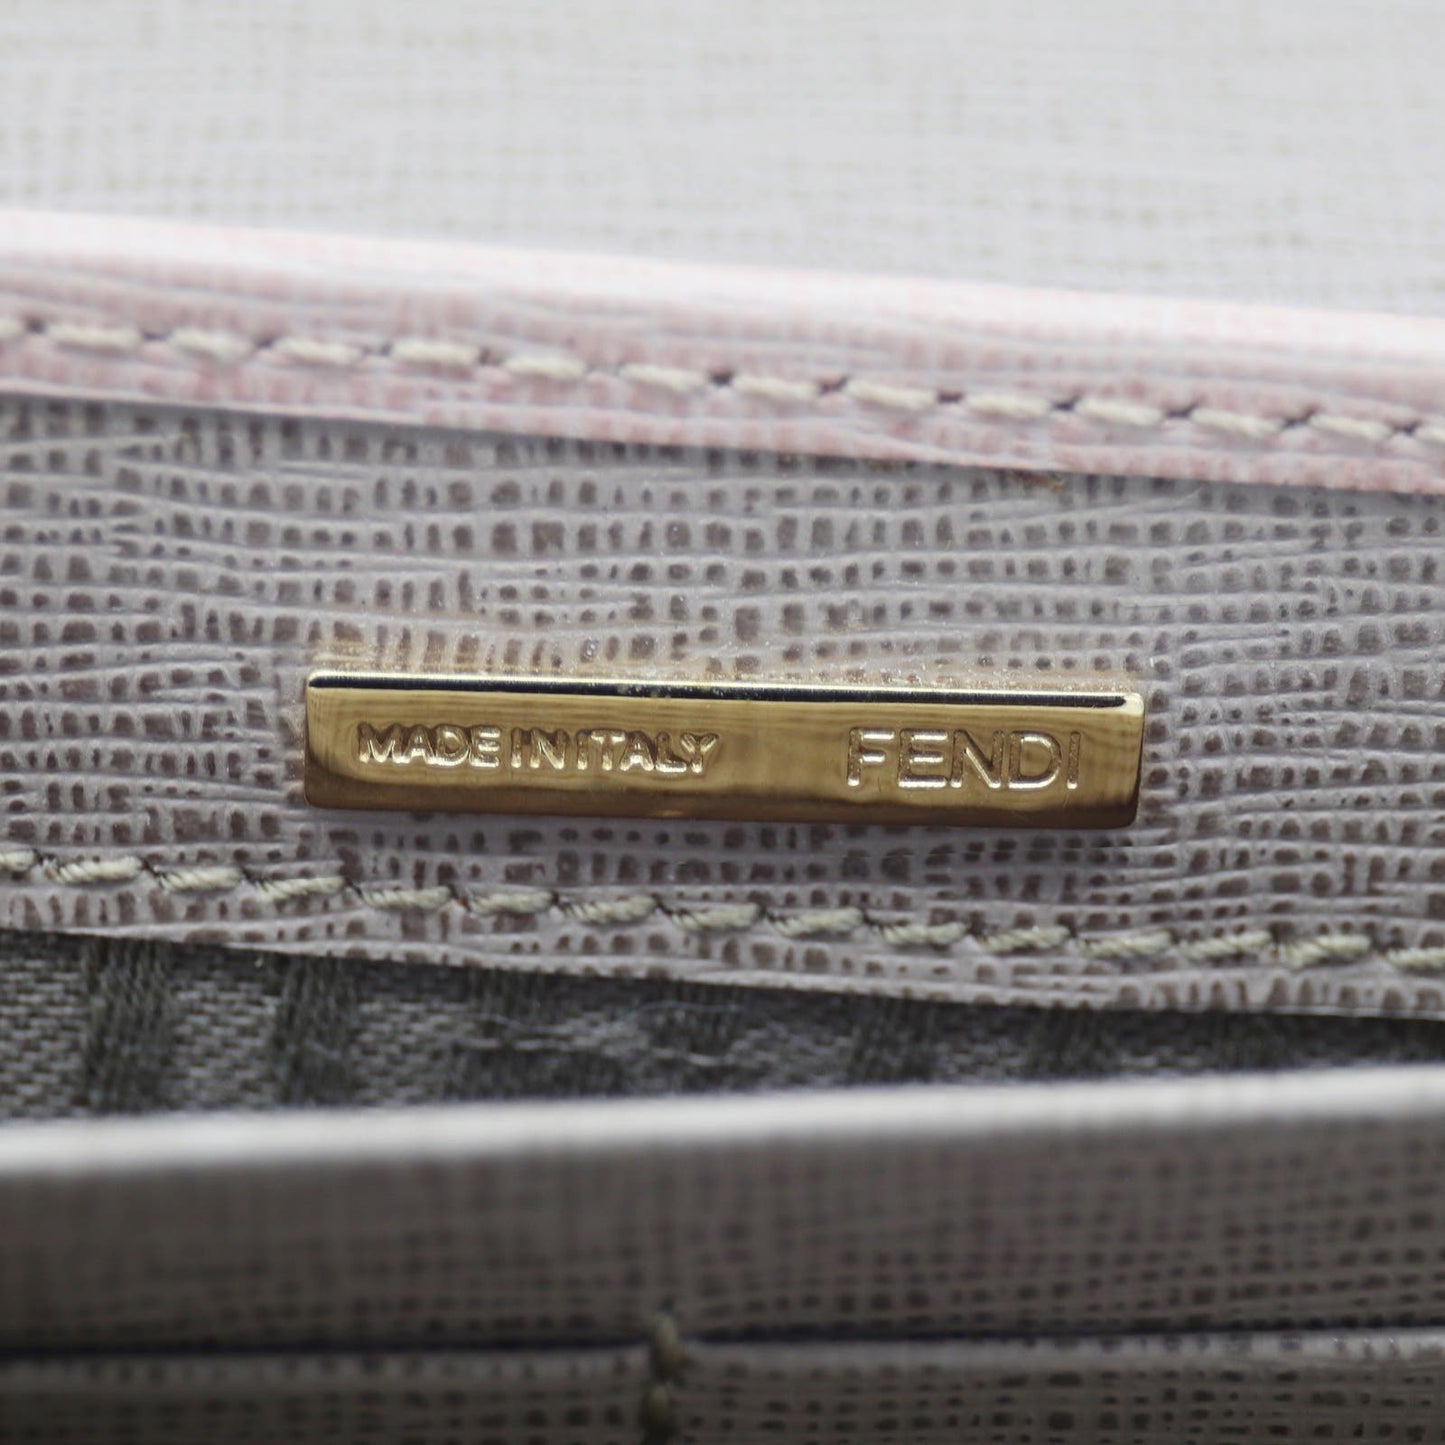 🔴 Fendi Long Wallet - Fuchsia Pink Leather